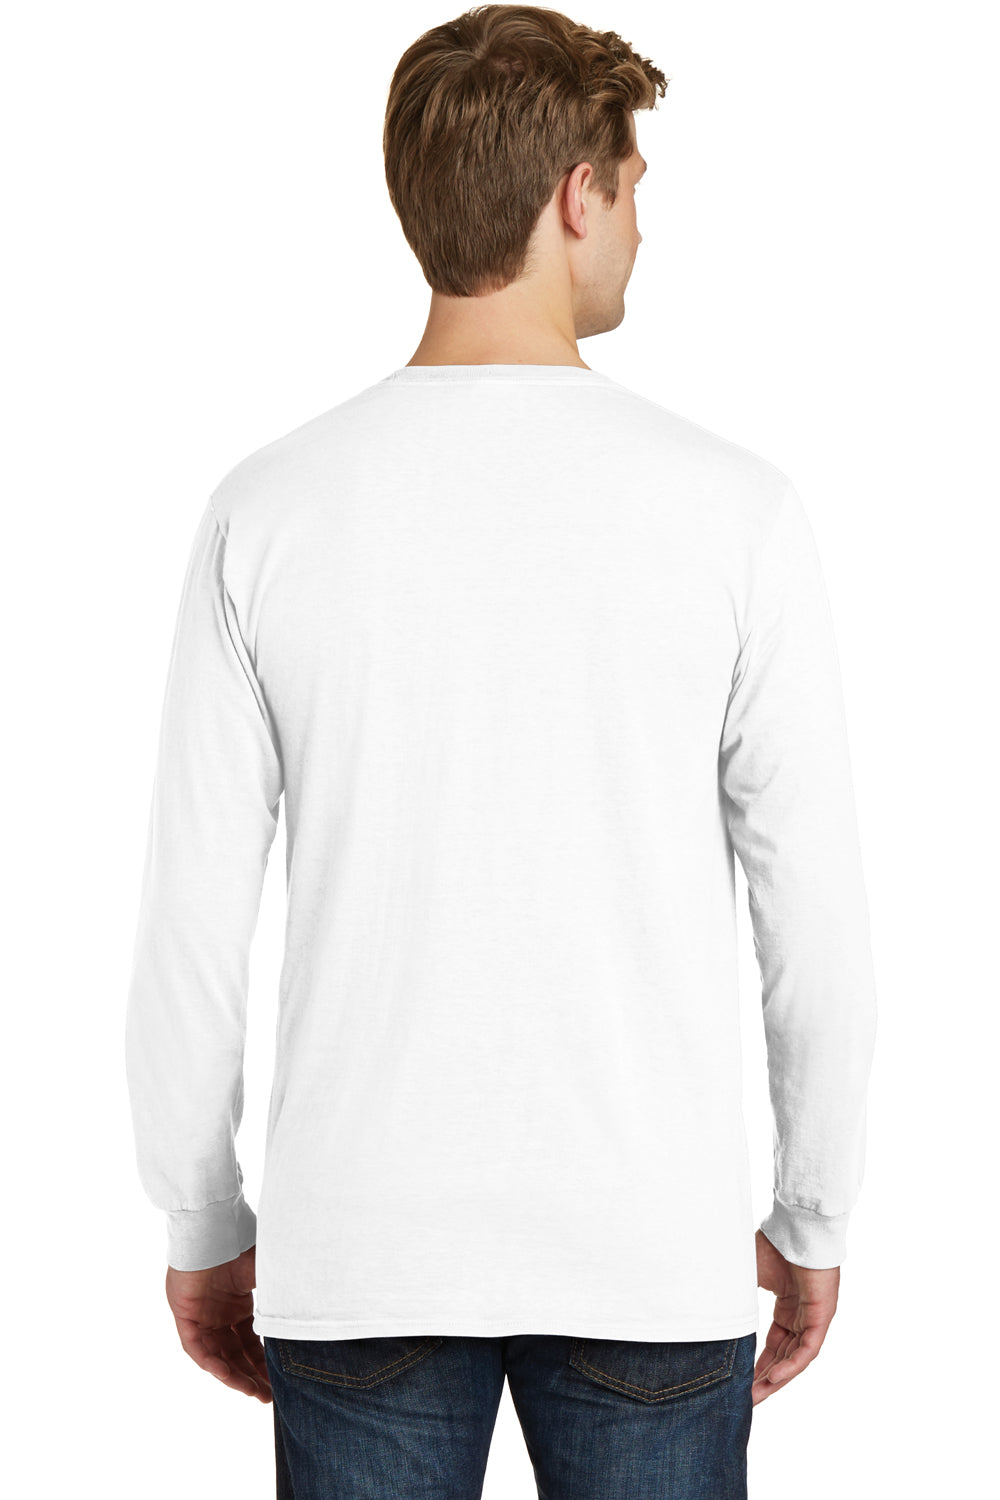 Port & Company PC099LS Mens Beach Wash Long Sleeve Crewneck T-Shirt White Back